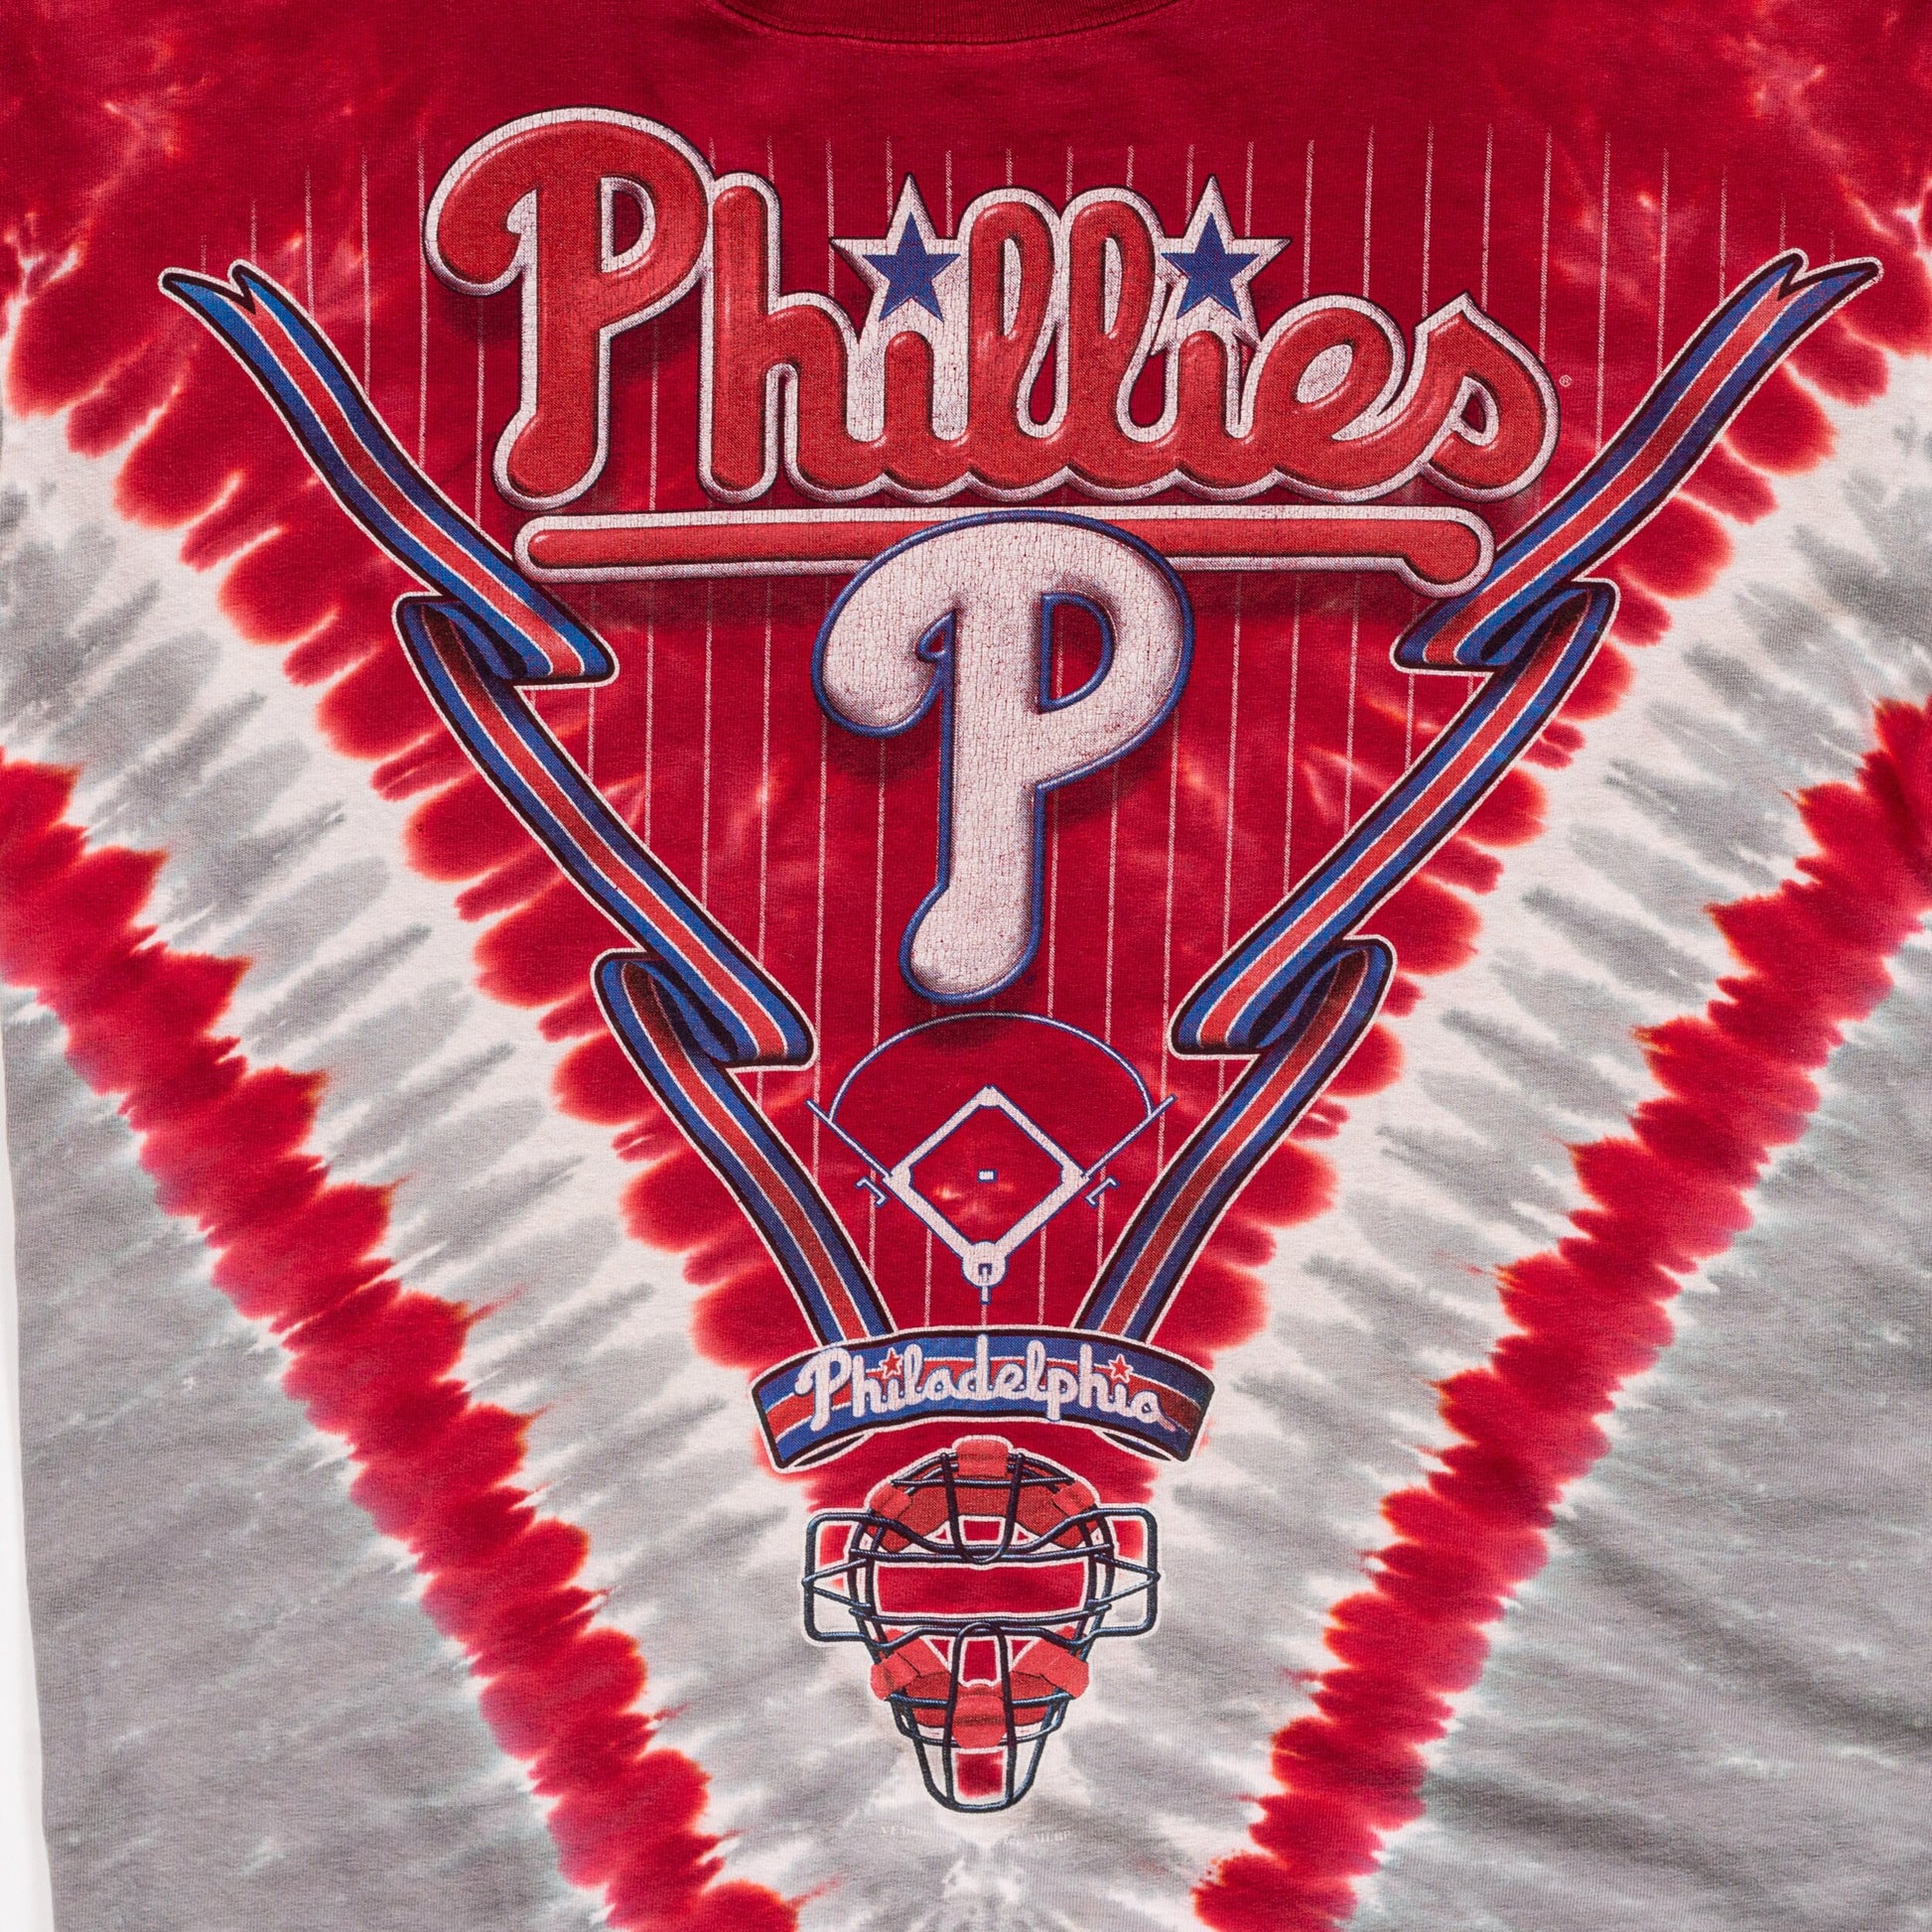 Philadelphia Phillies blue throwback tie-dye logo t-shirt